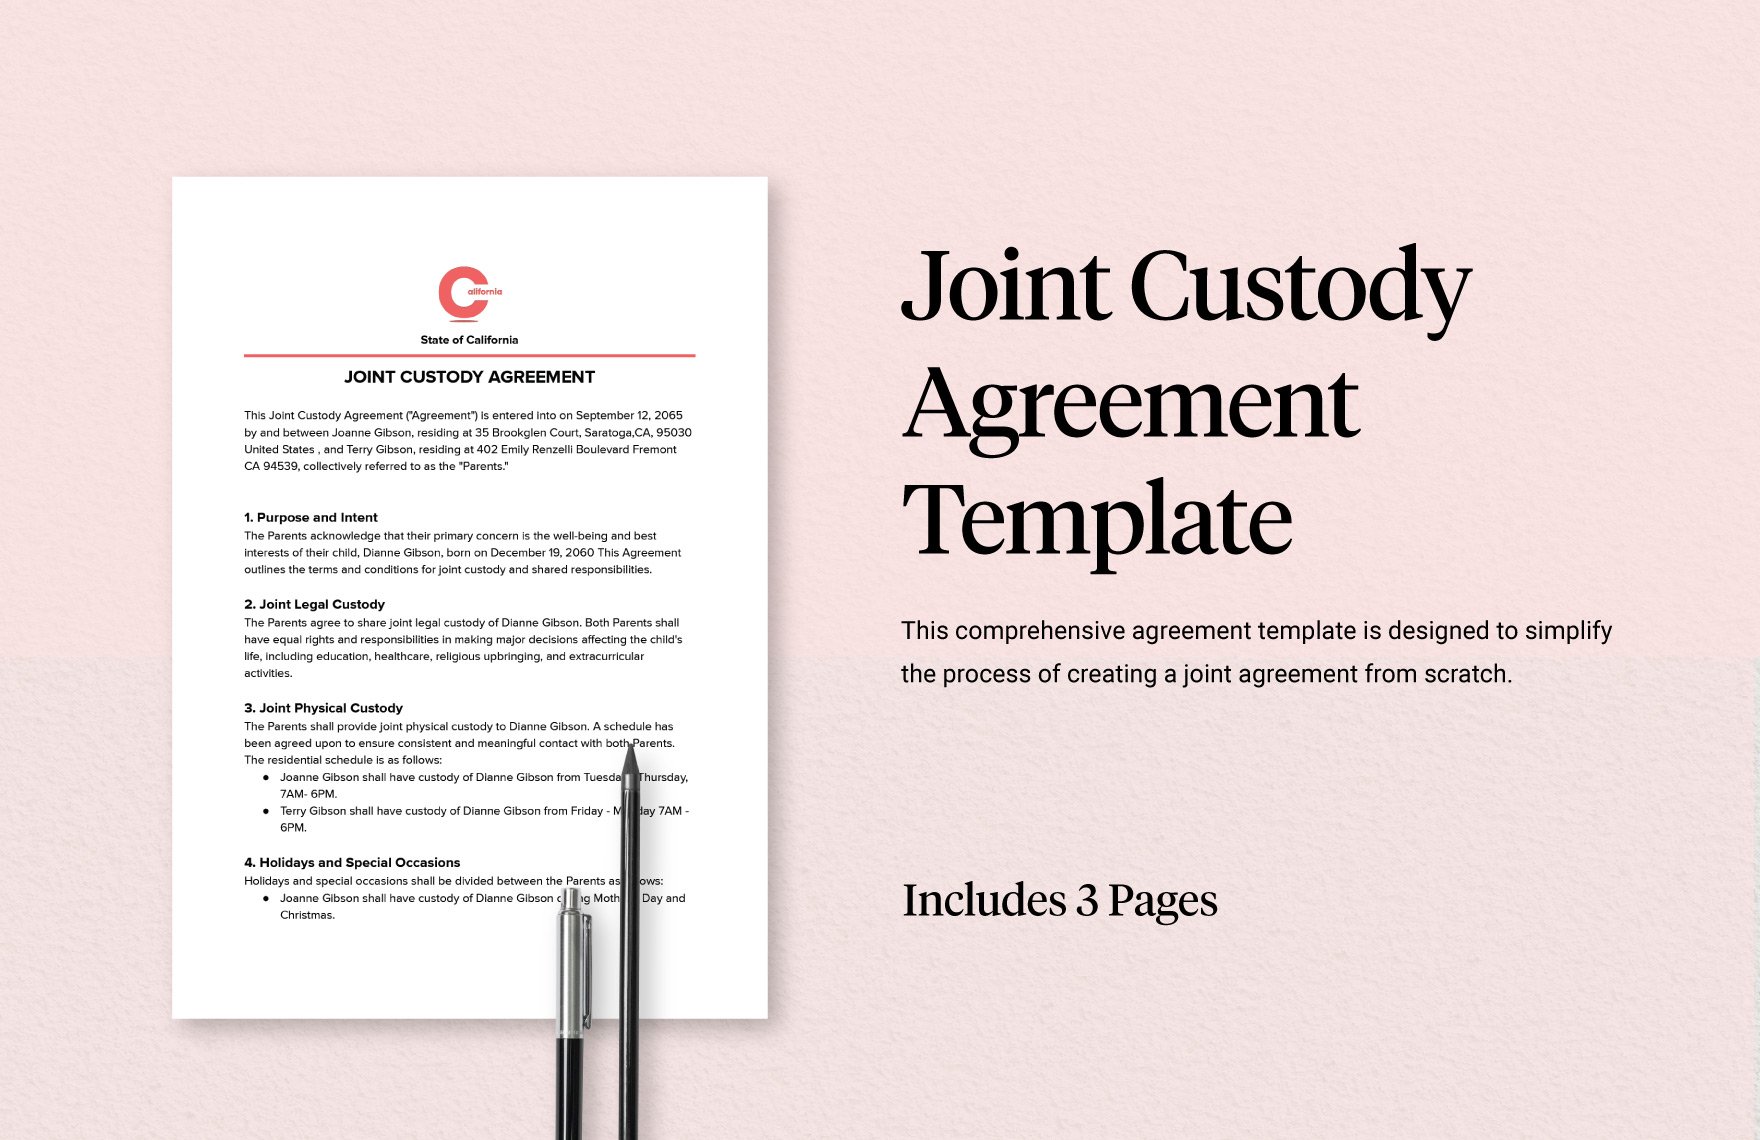 Joint Custody Agreement Template